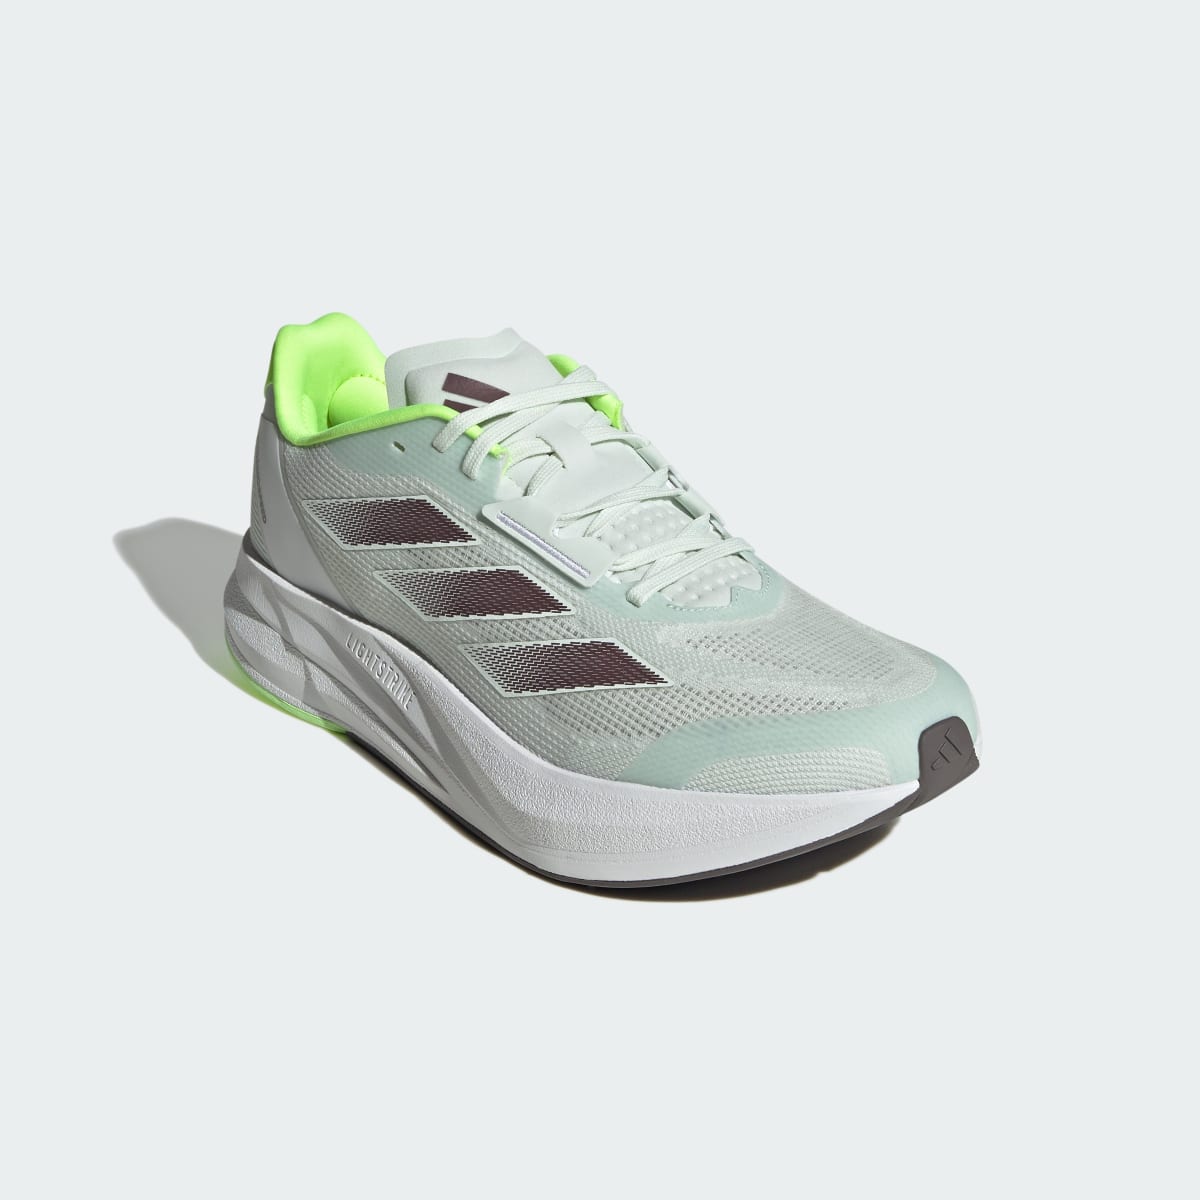 Adidas Duramo Speed Shoes. 5